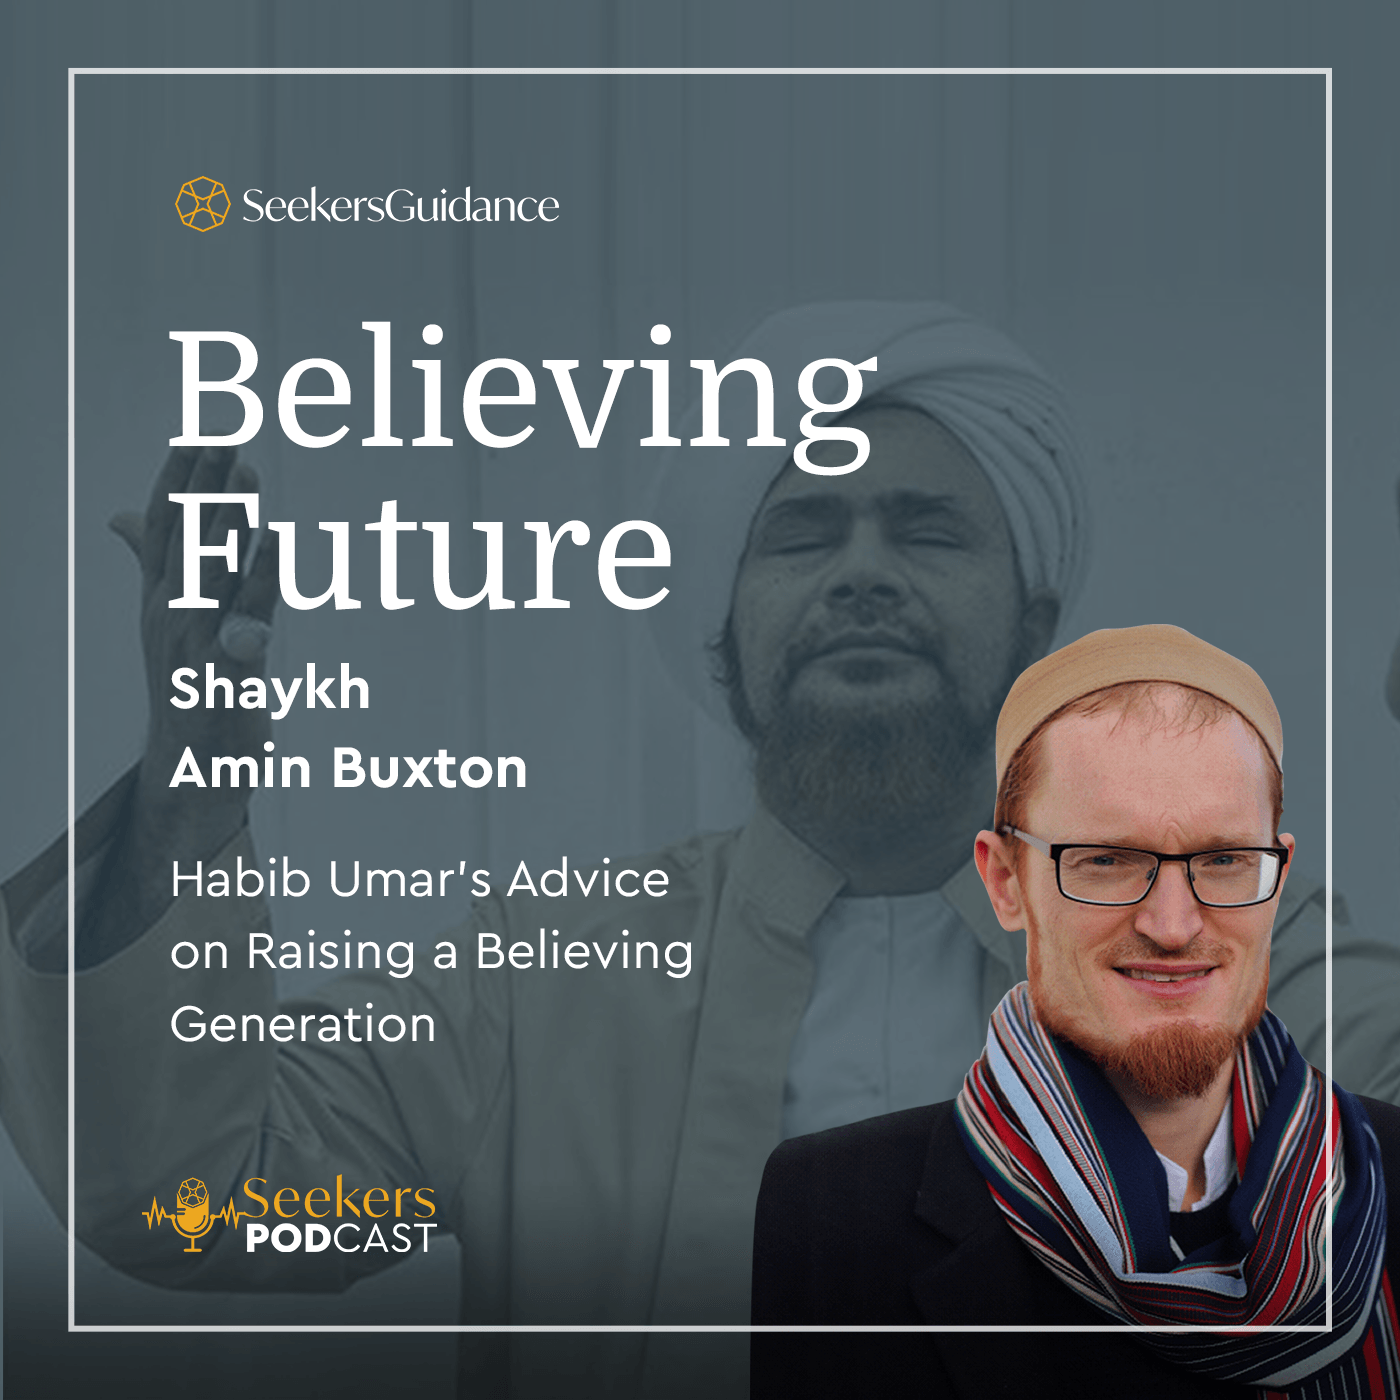 The Believing Future: Habib Umar's Advice on Raising a Believing Generation